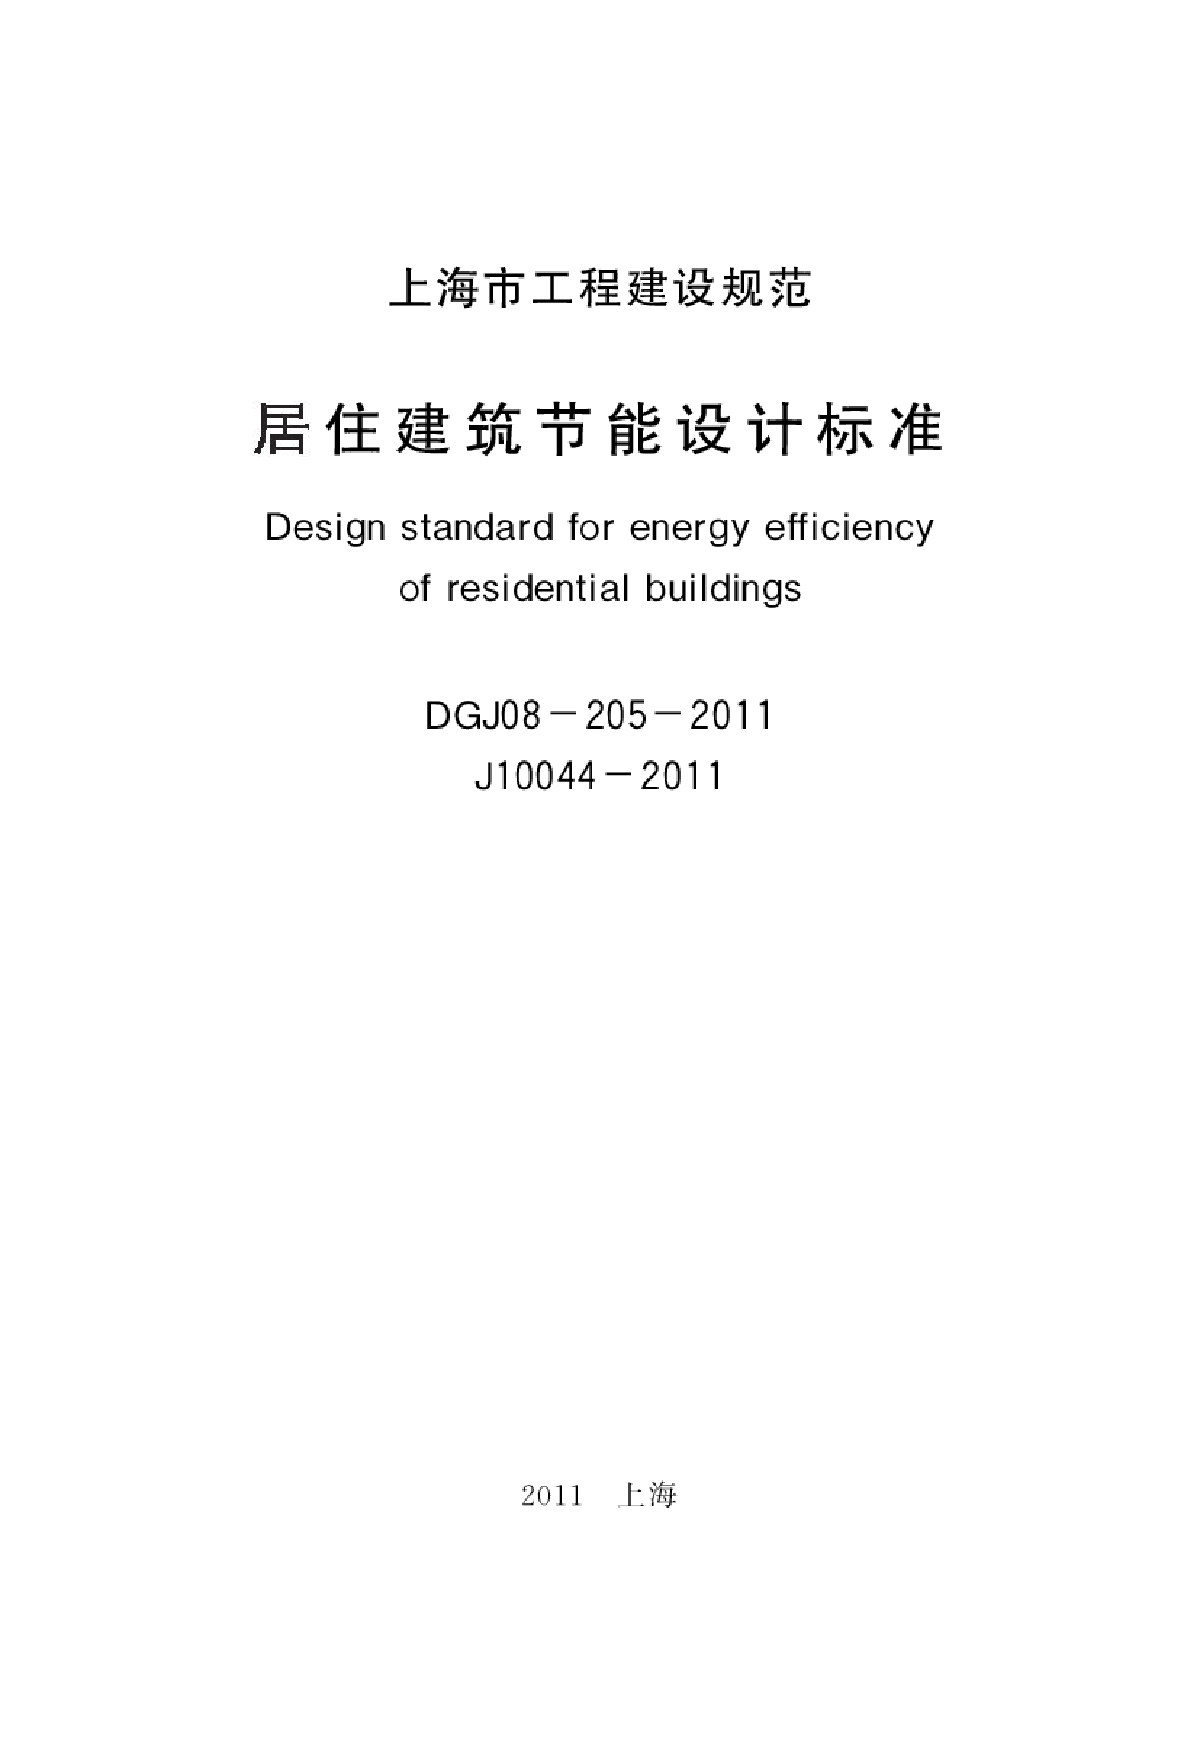 DGJ08-205-2011 上海市居住建筑节能设计标准-图二